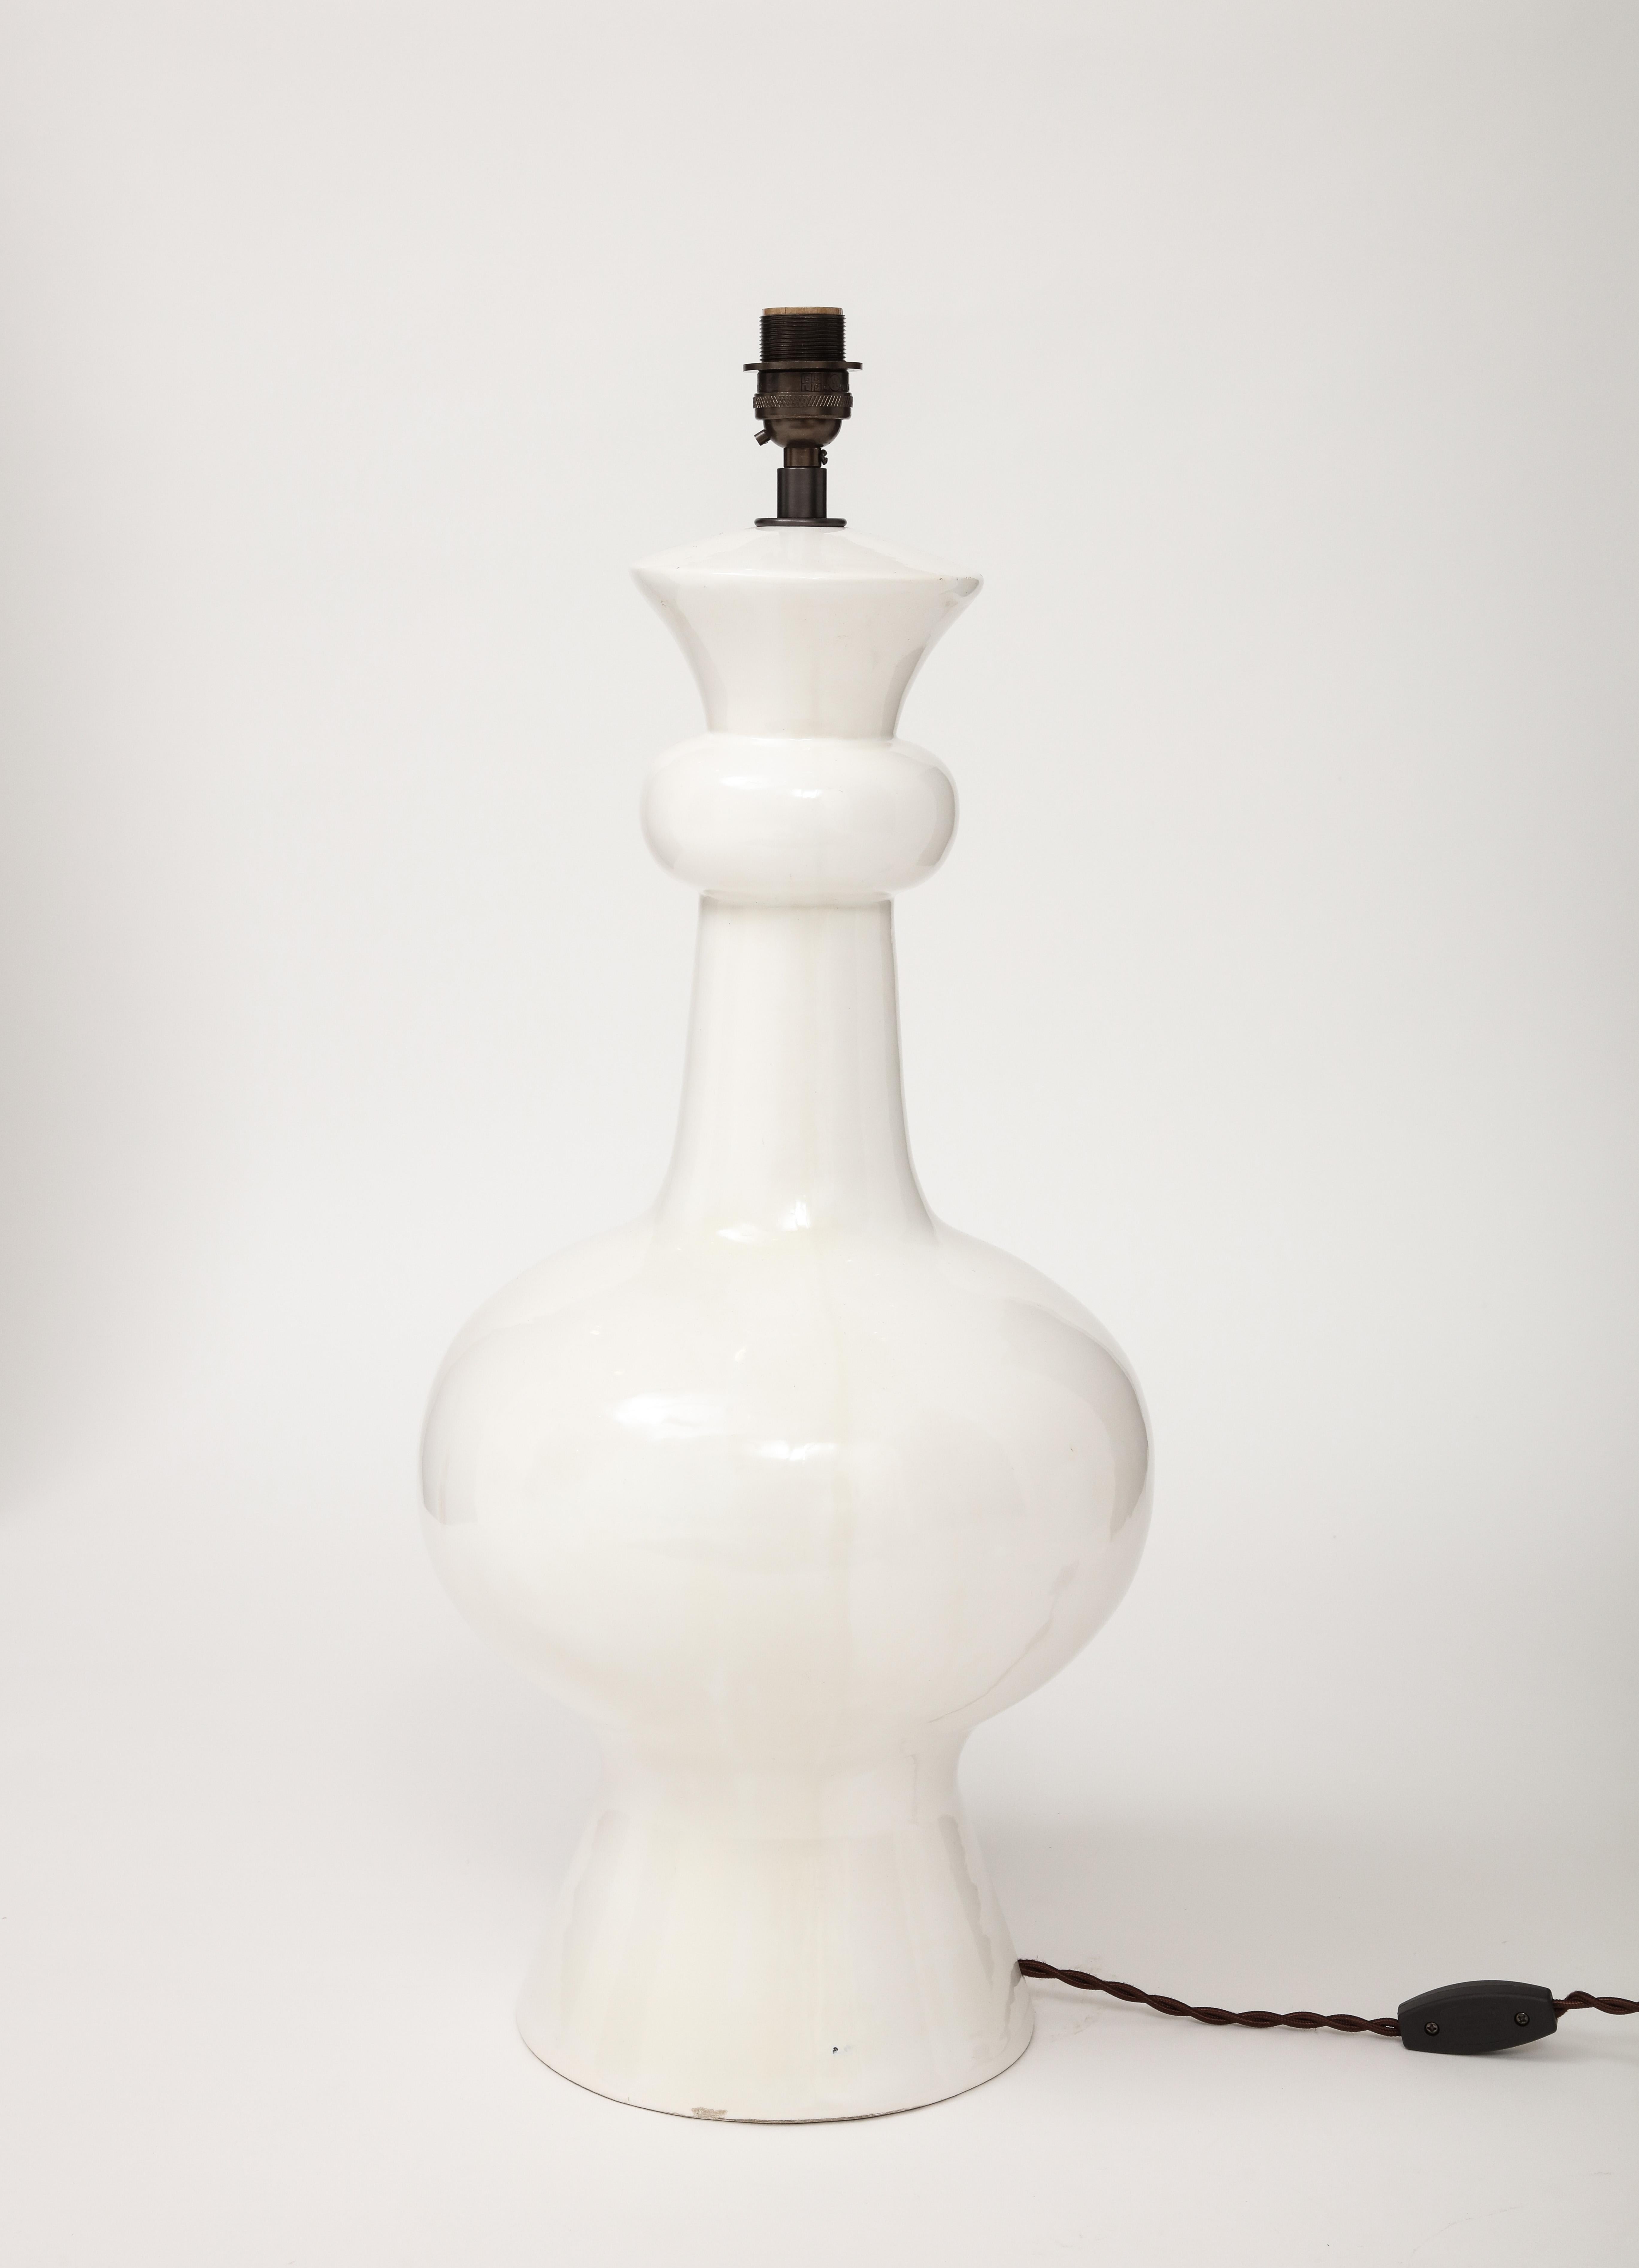 Large Scale Italian White Ceramic Lamp, 1960's For Sale 4